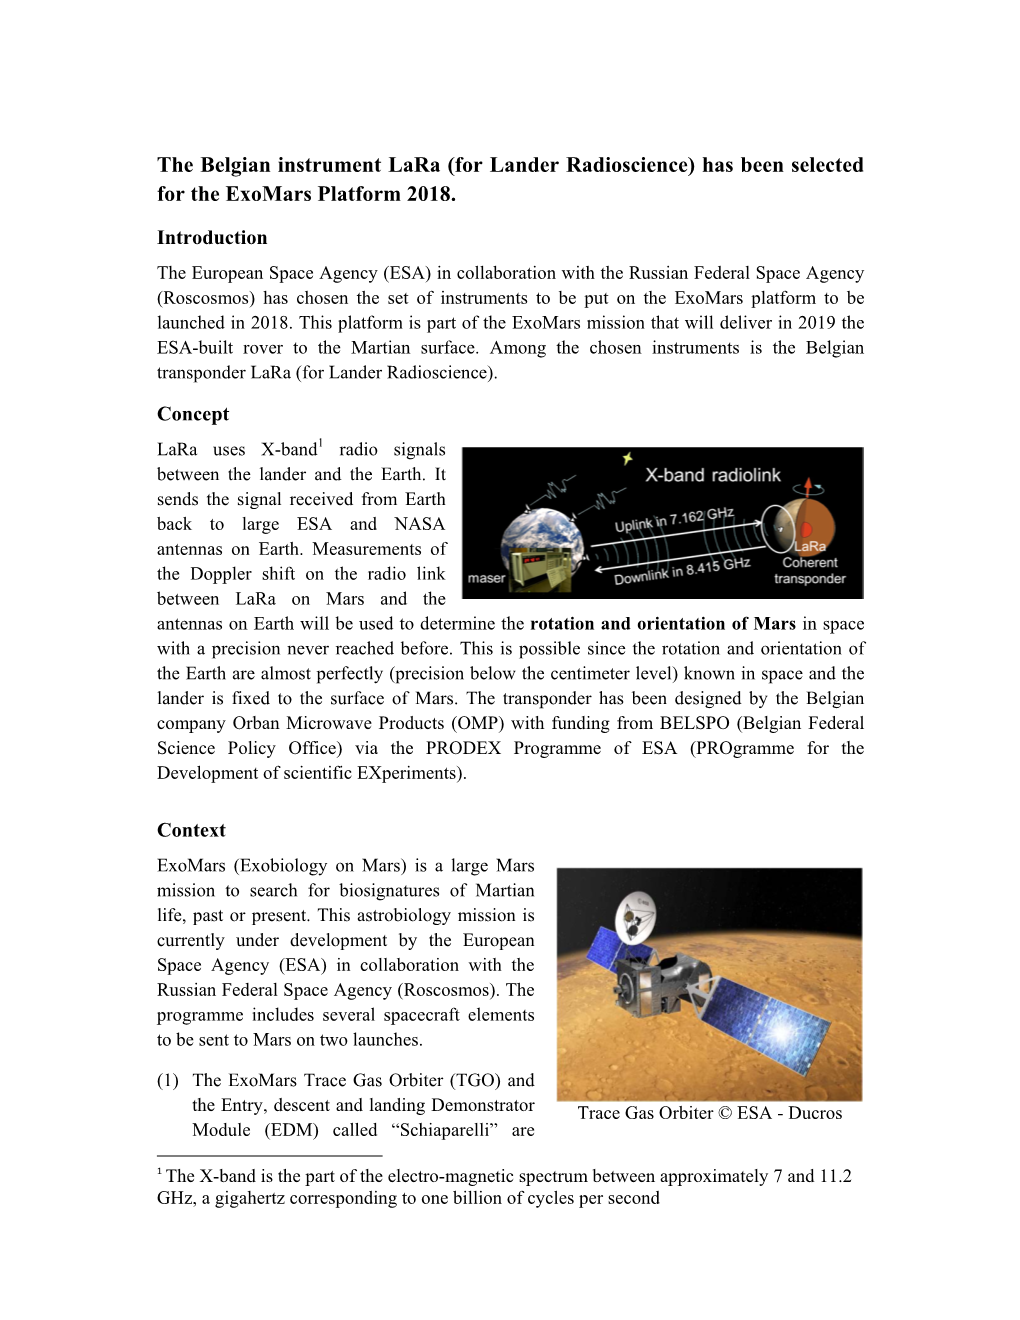 The Belgian Instrument Lara (For Lander Radioscience) Has Been Selected for the Exomars Platform 2018